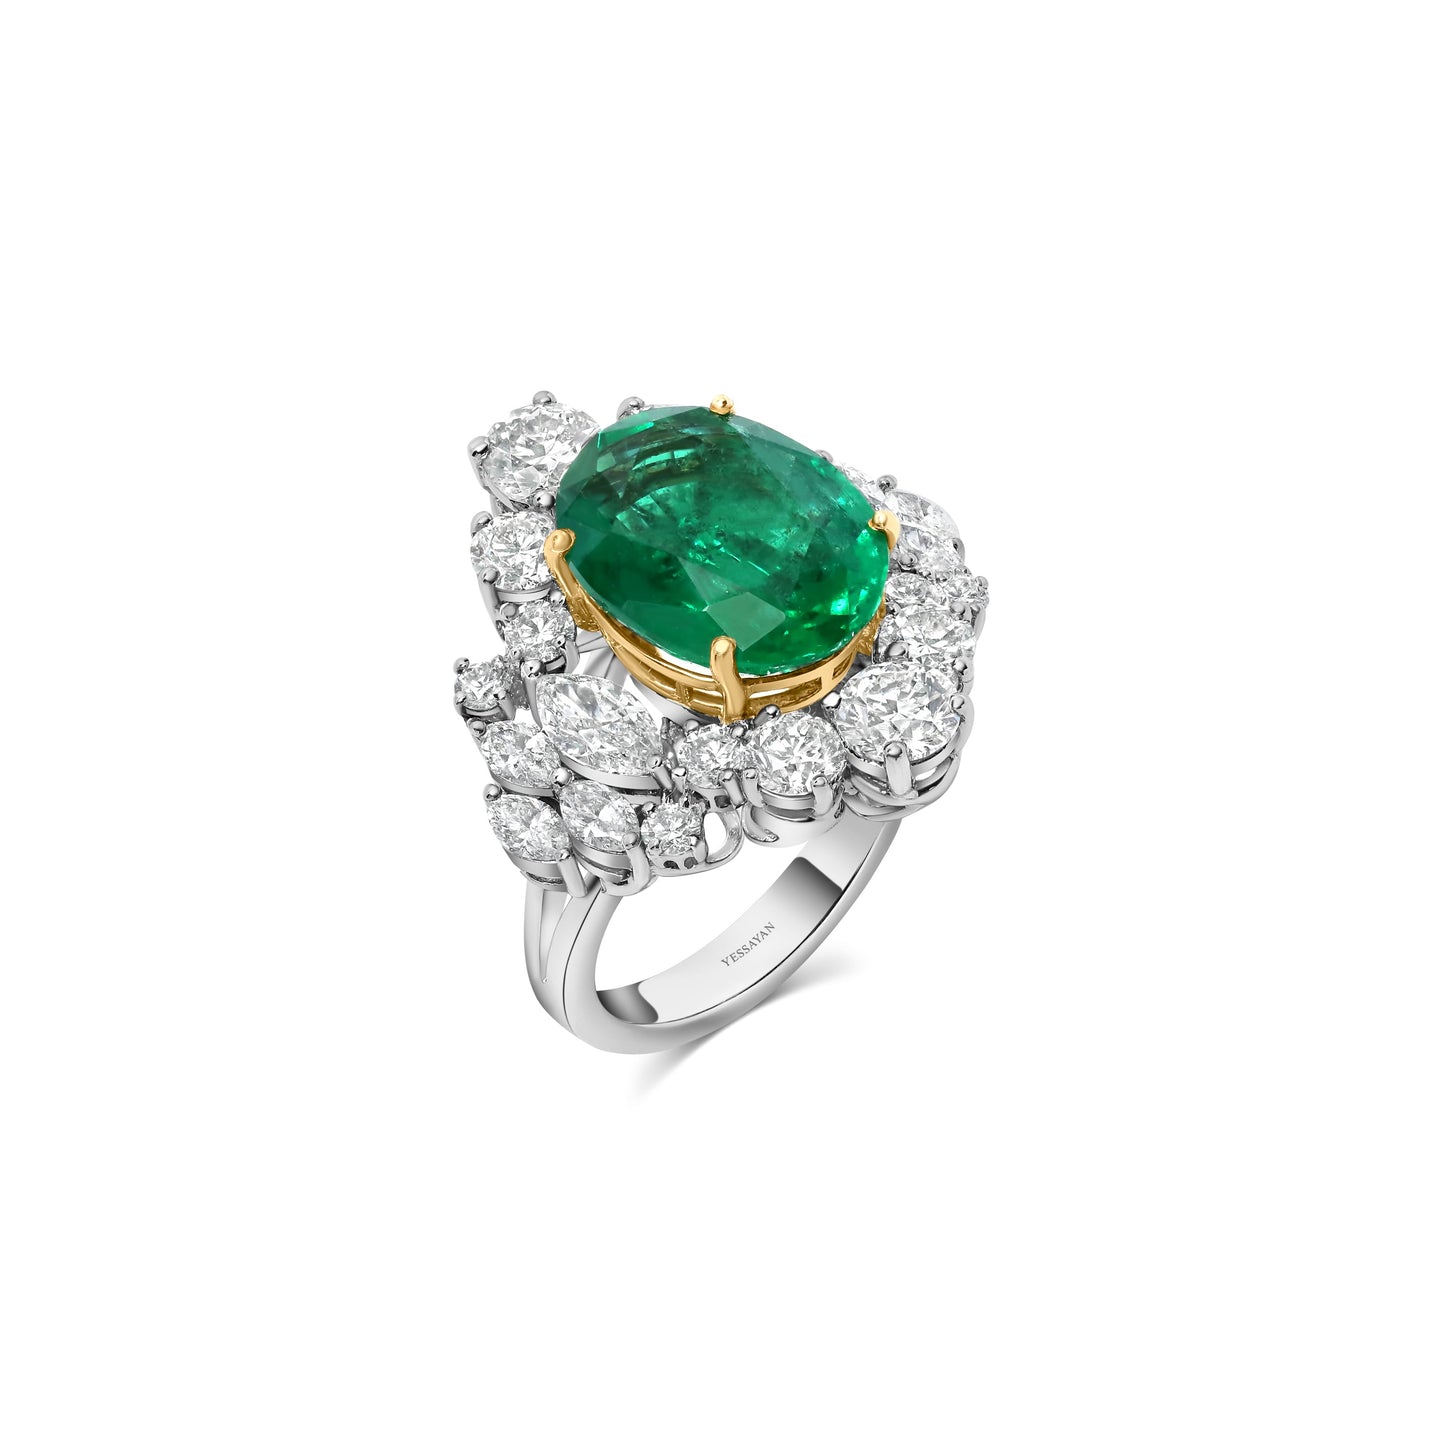 Oval Emerald & Diamond Statement Ring